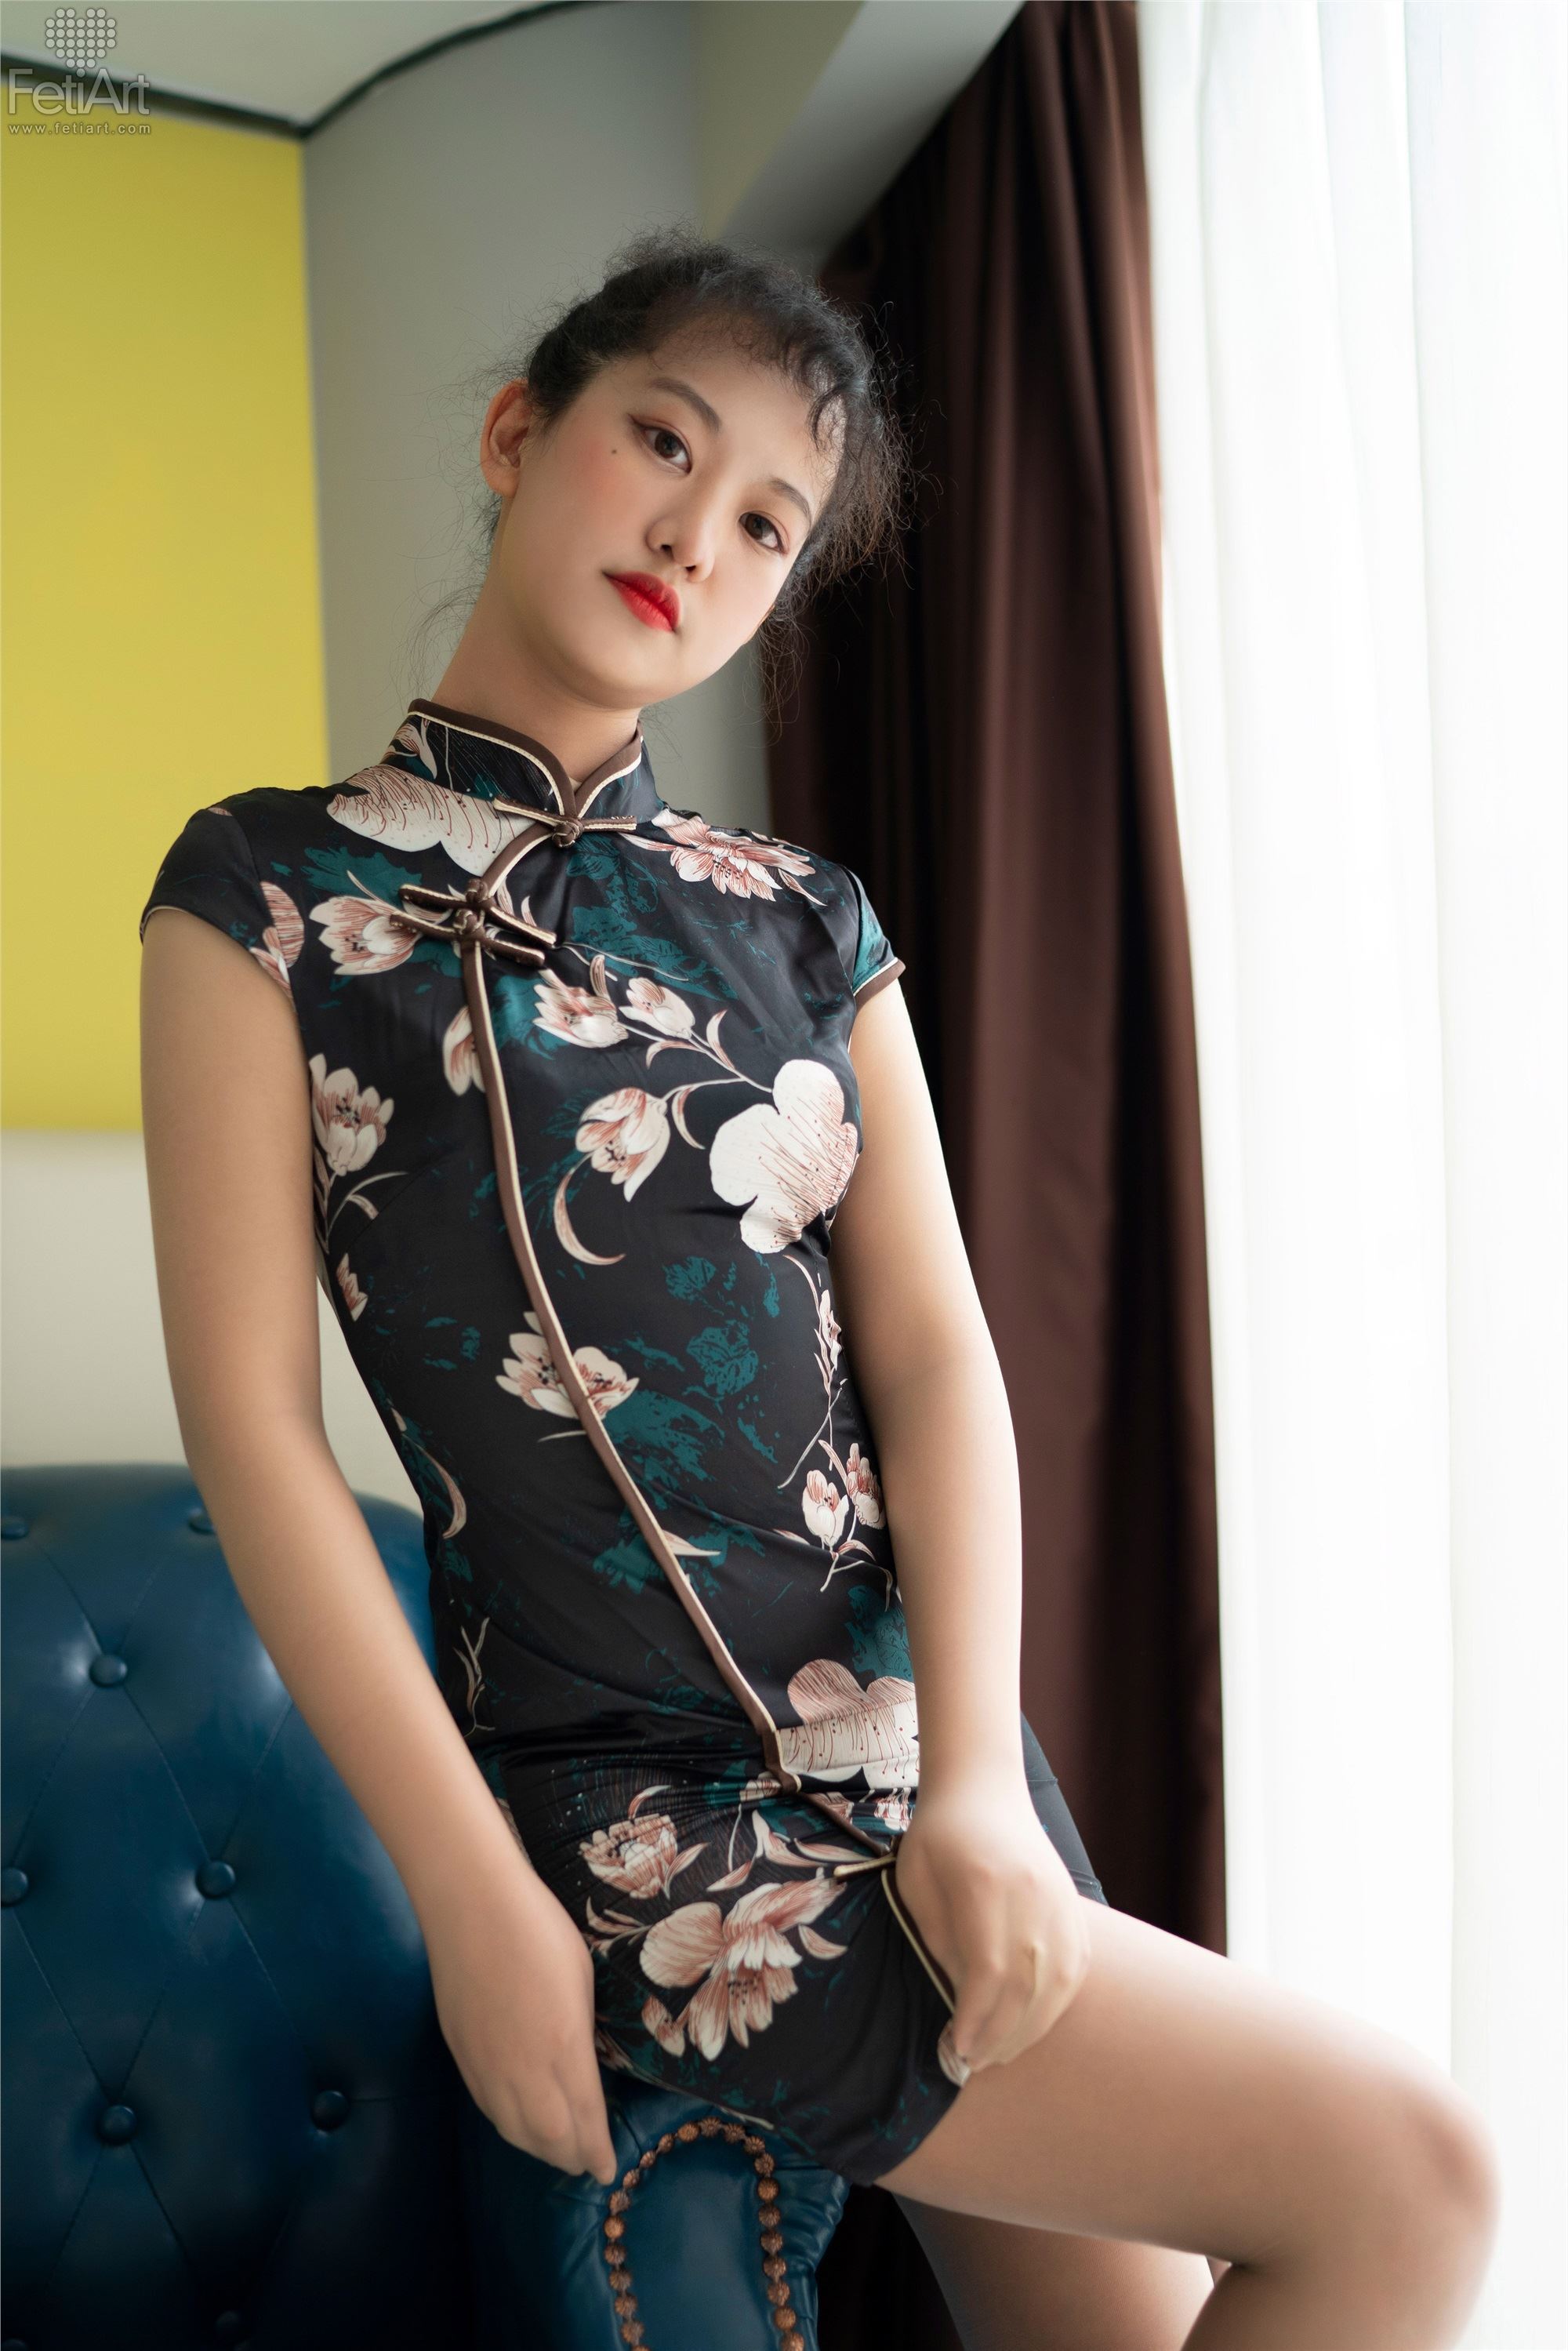 FetiArt尚物集 NO.00062 Chinese Dressing Girl